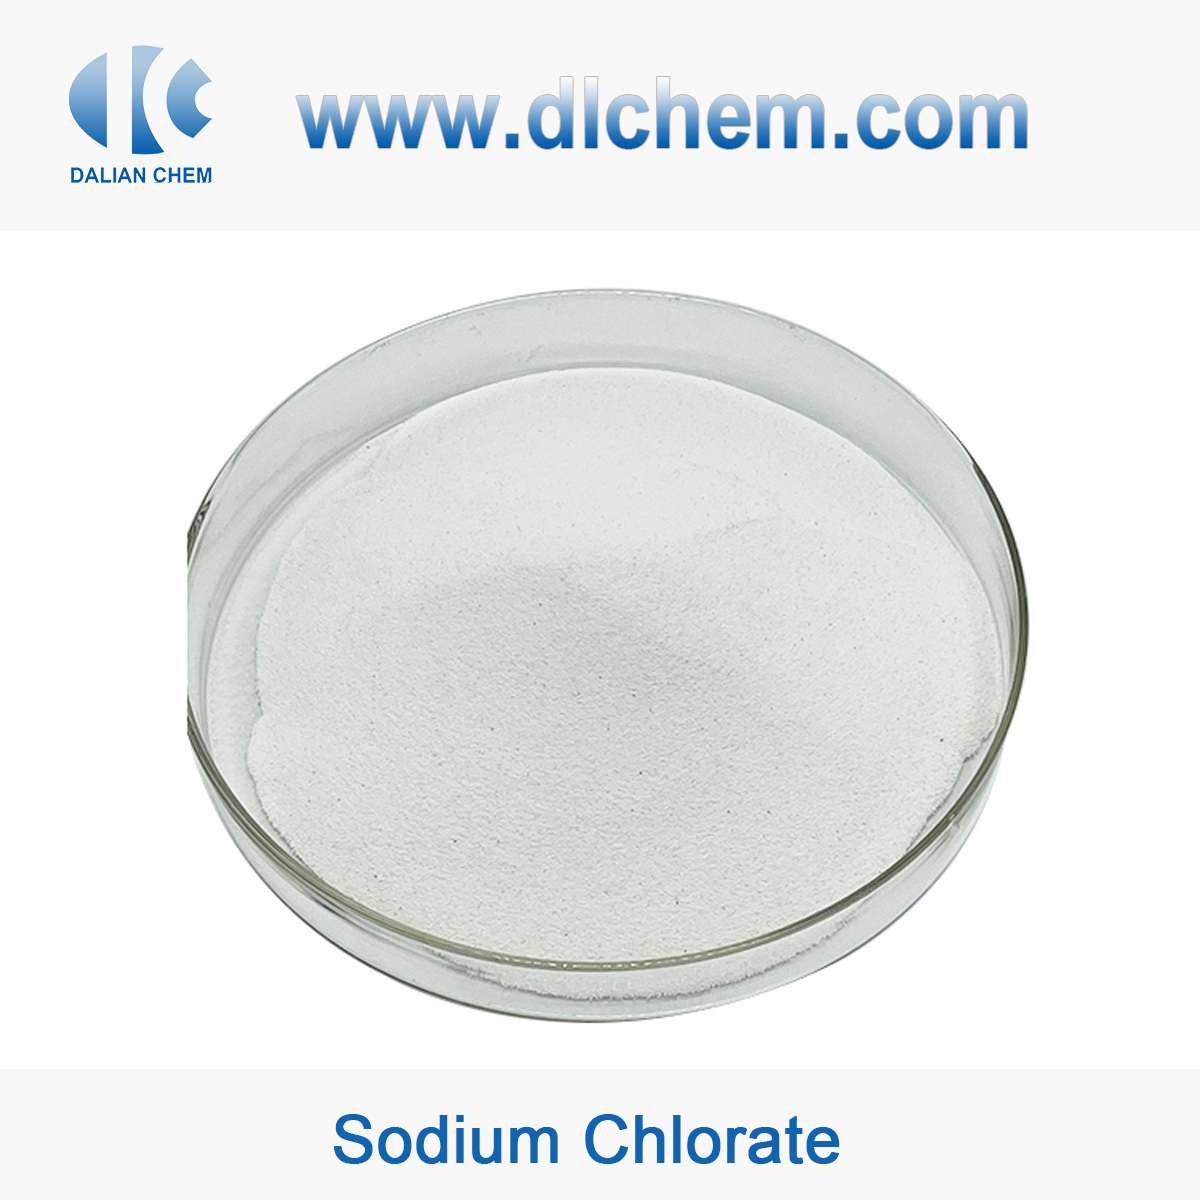 Sodium chlorate  CAS No.7775-9-9